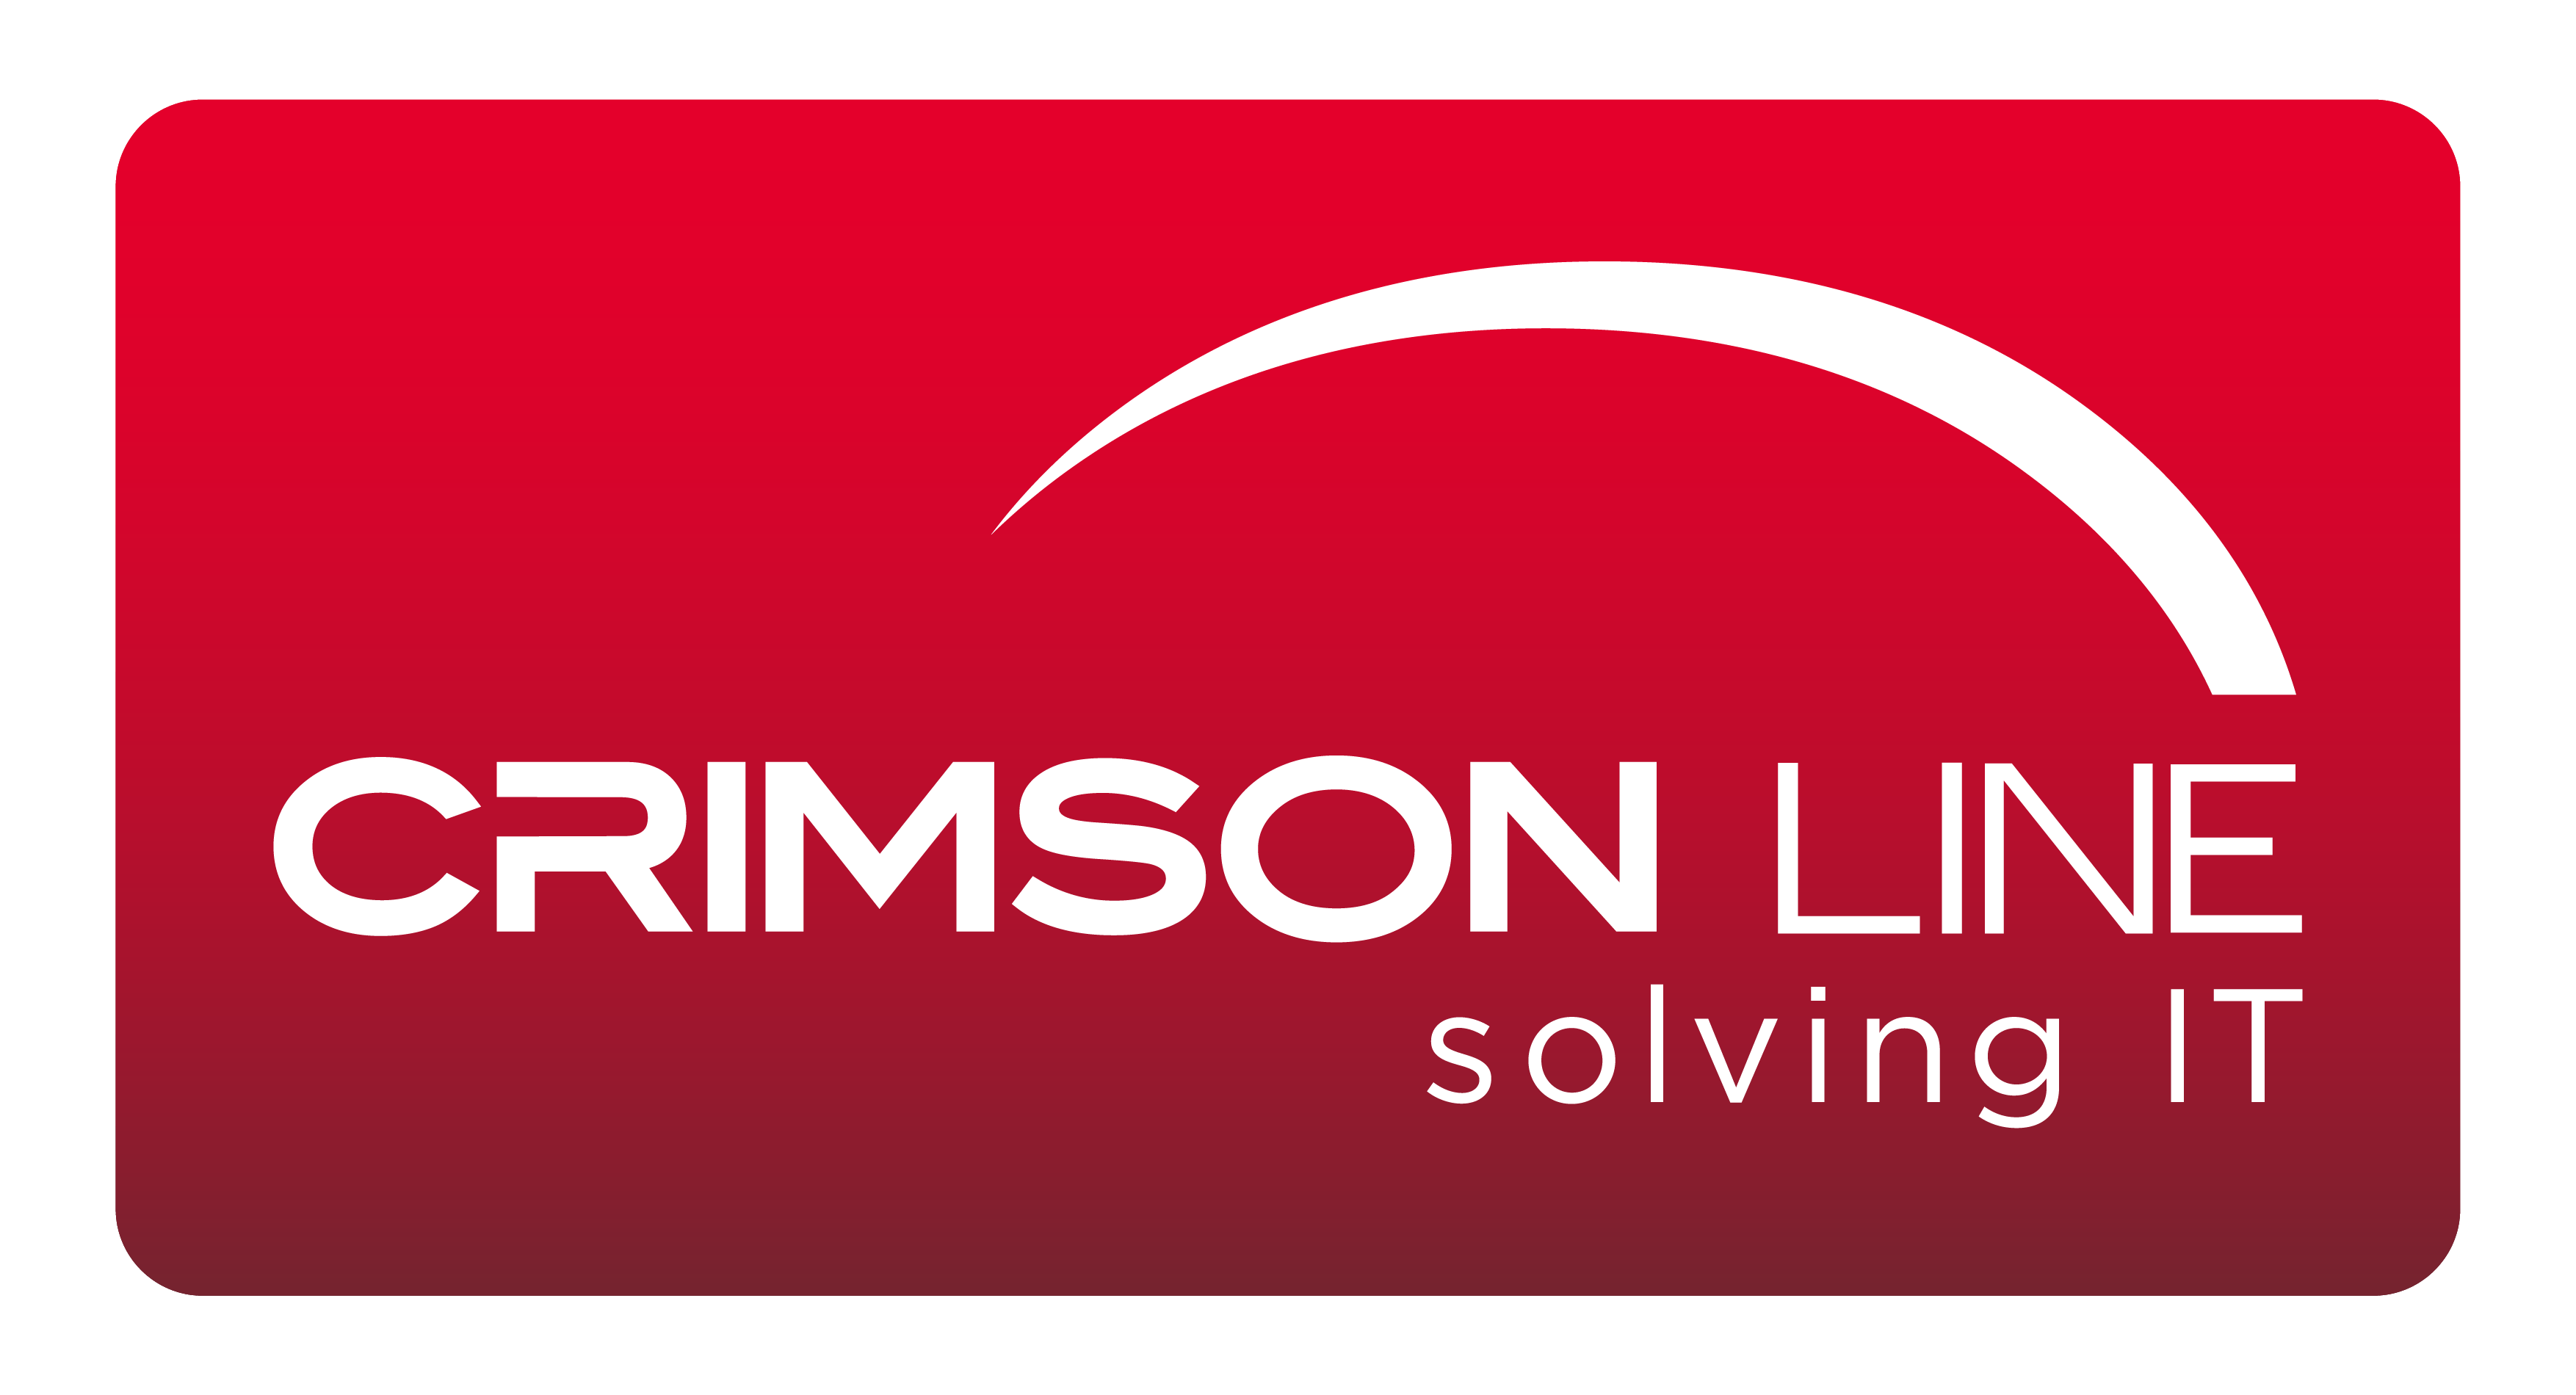 Crimson Line - solving IT